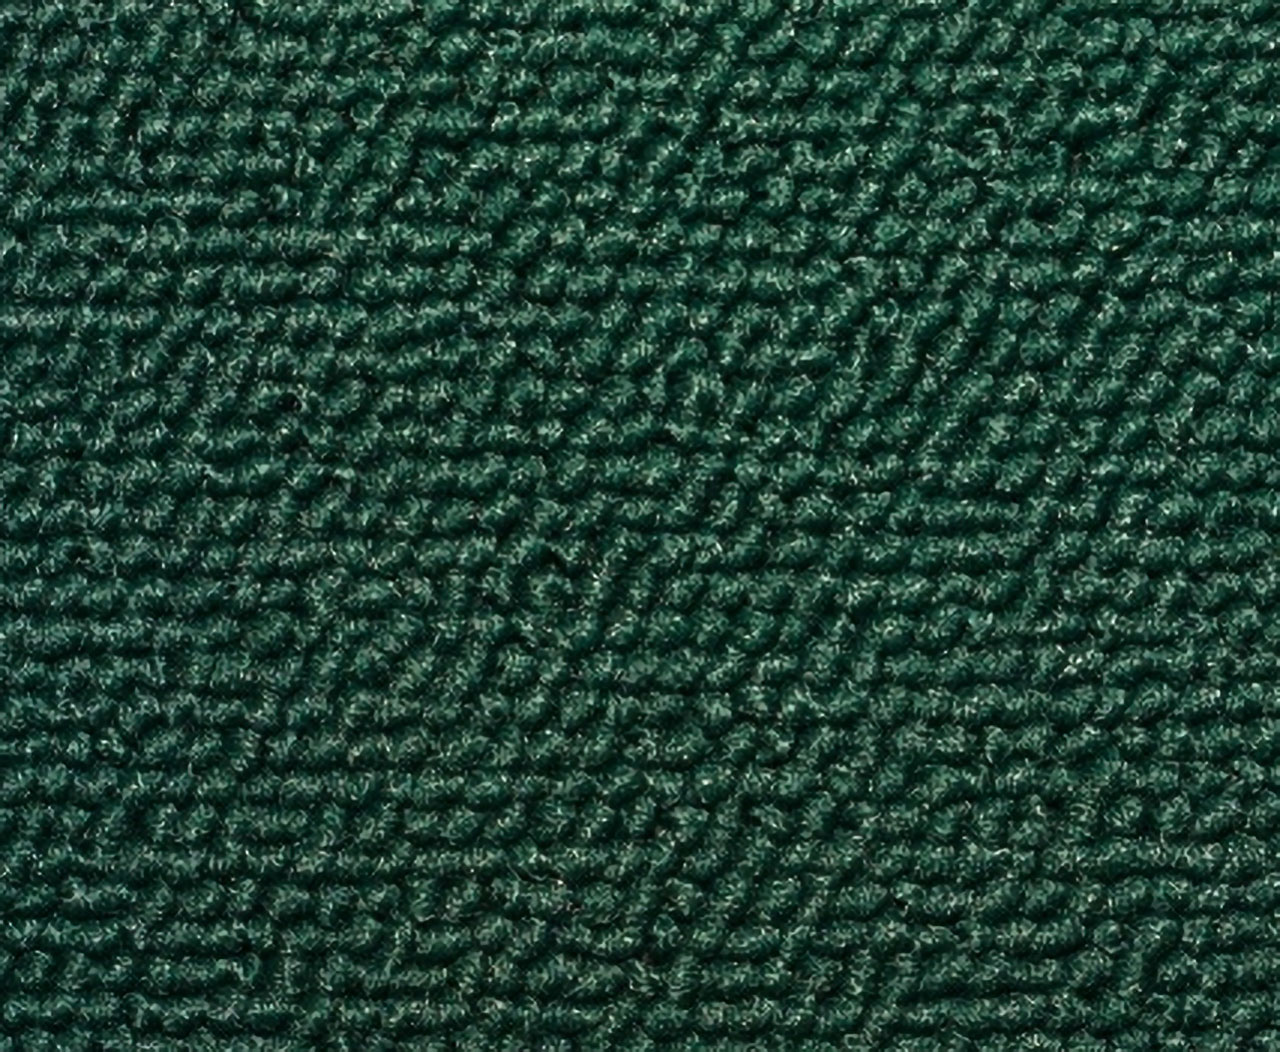 Holden Standard EH Standard Ute C59 Palais Green Carpet (Image 1 of 1)